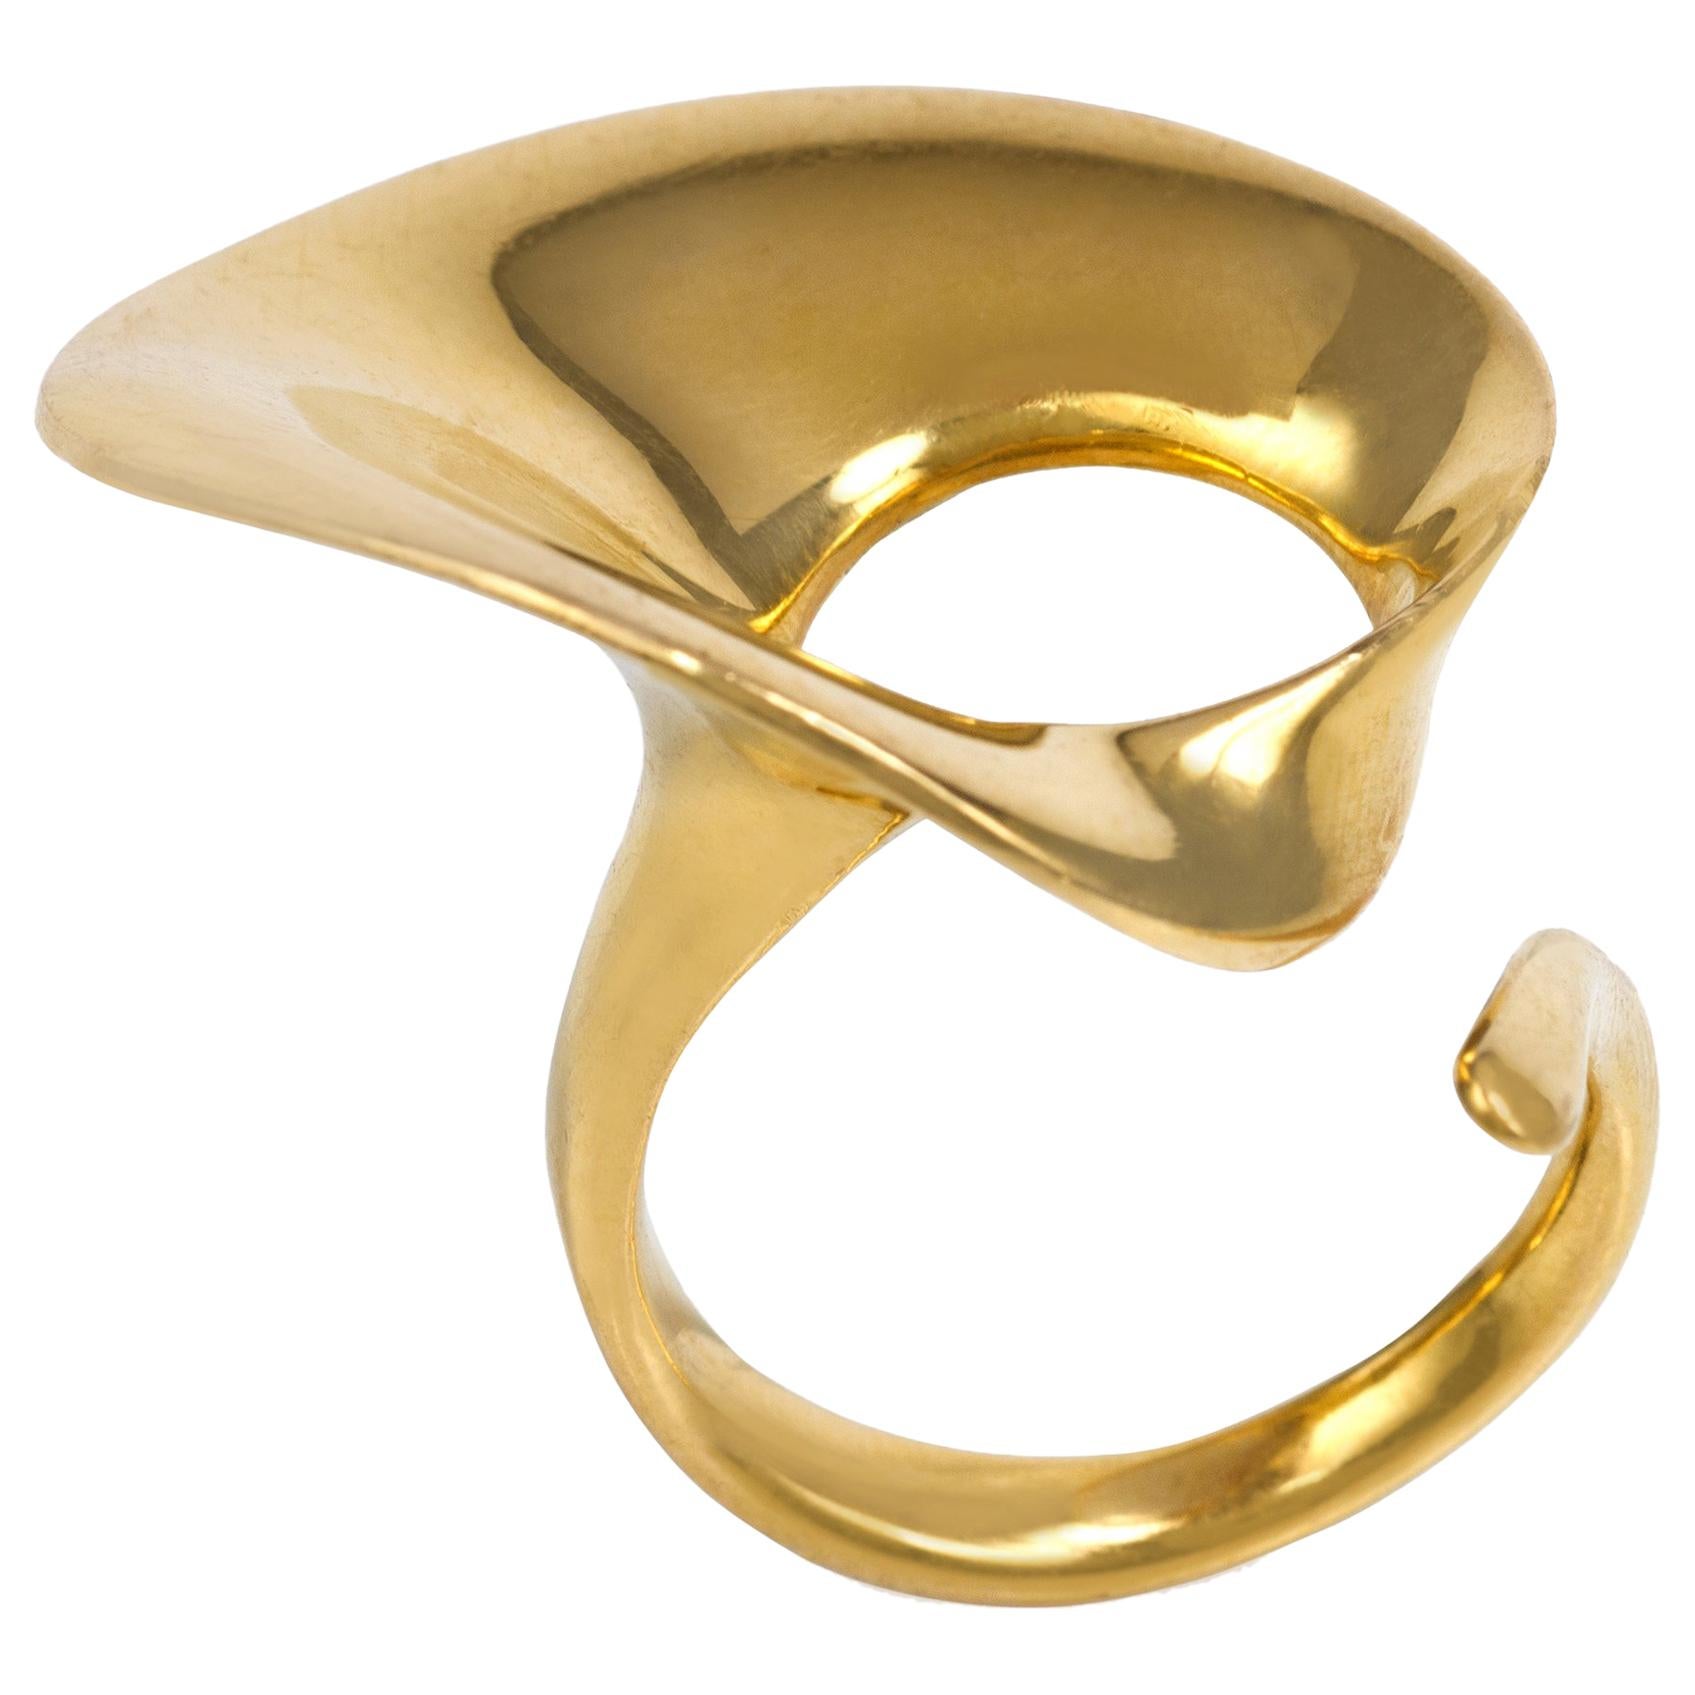 1960s Vivianna Torun for Georg Jensen Gold Mobius Design Ring